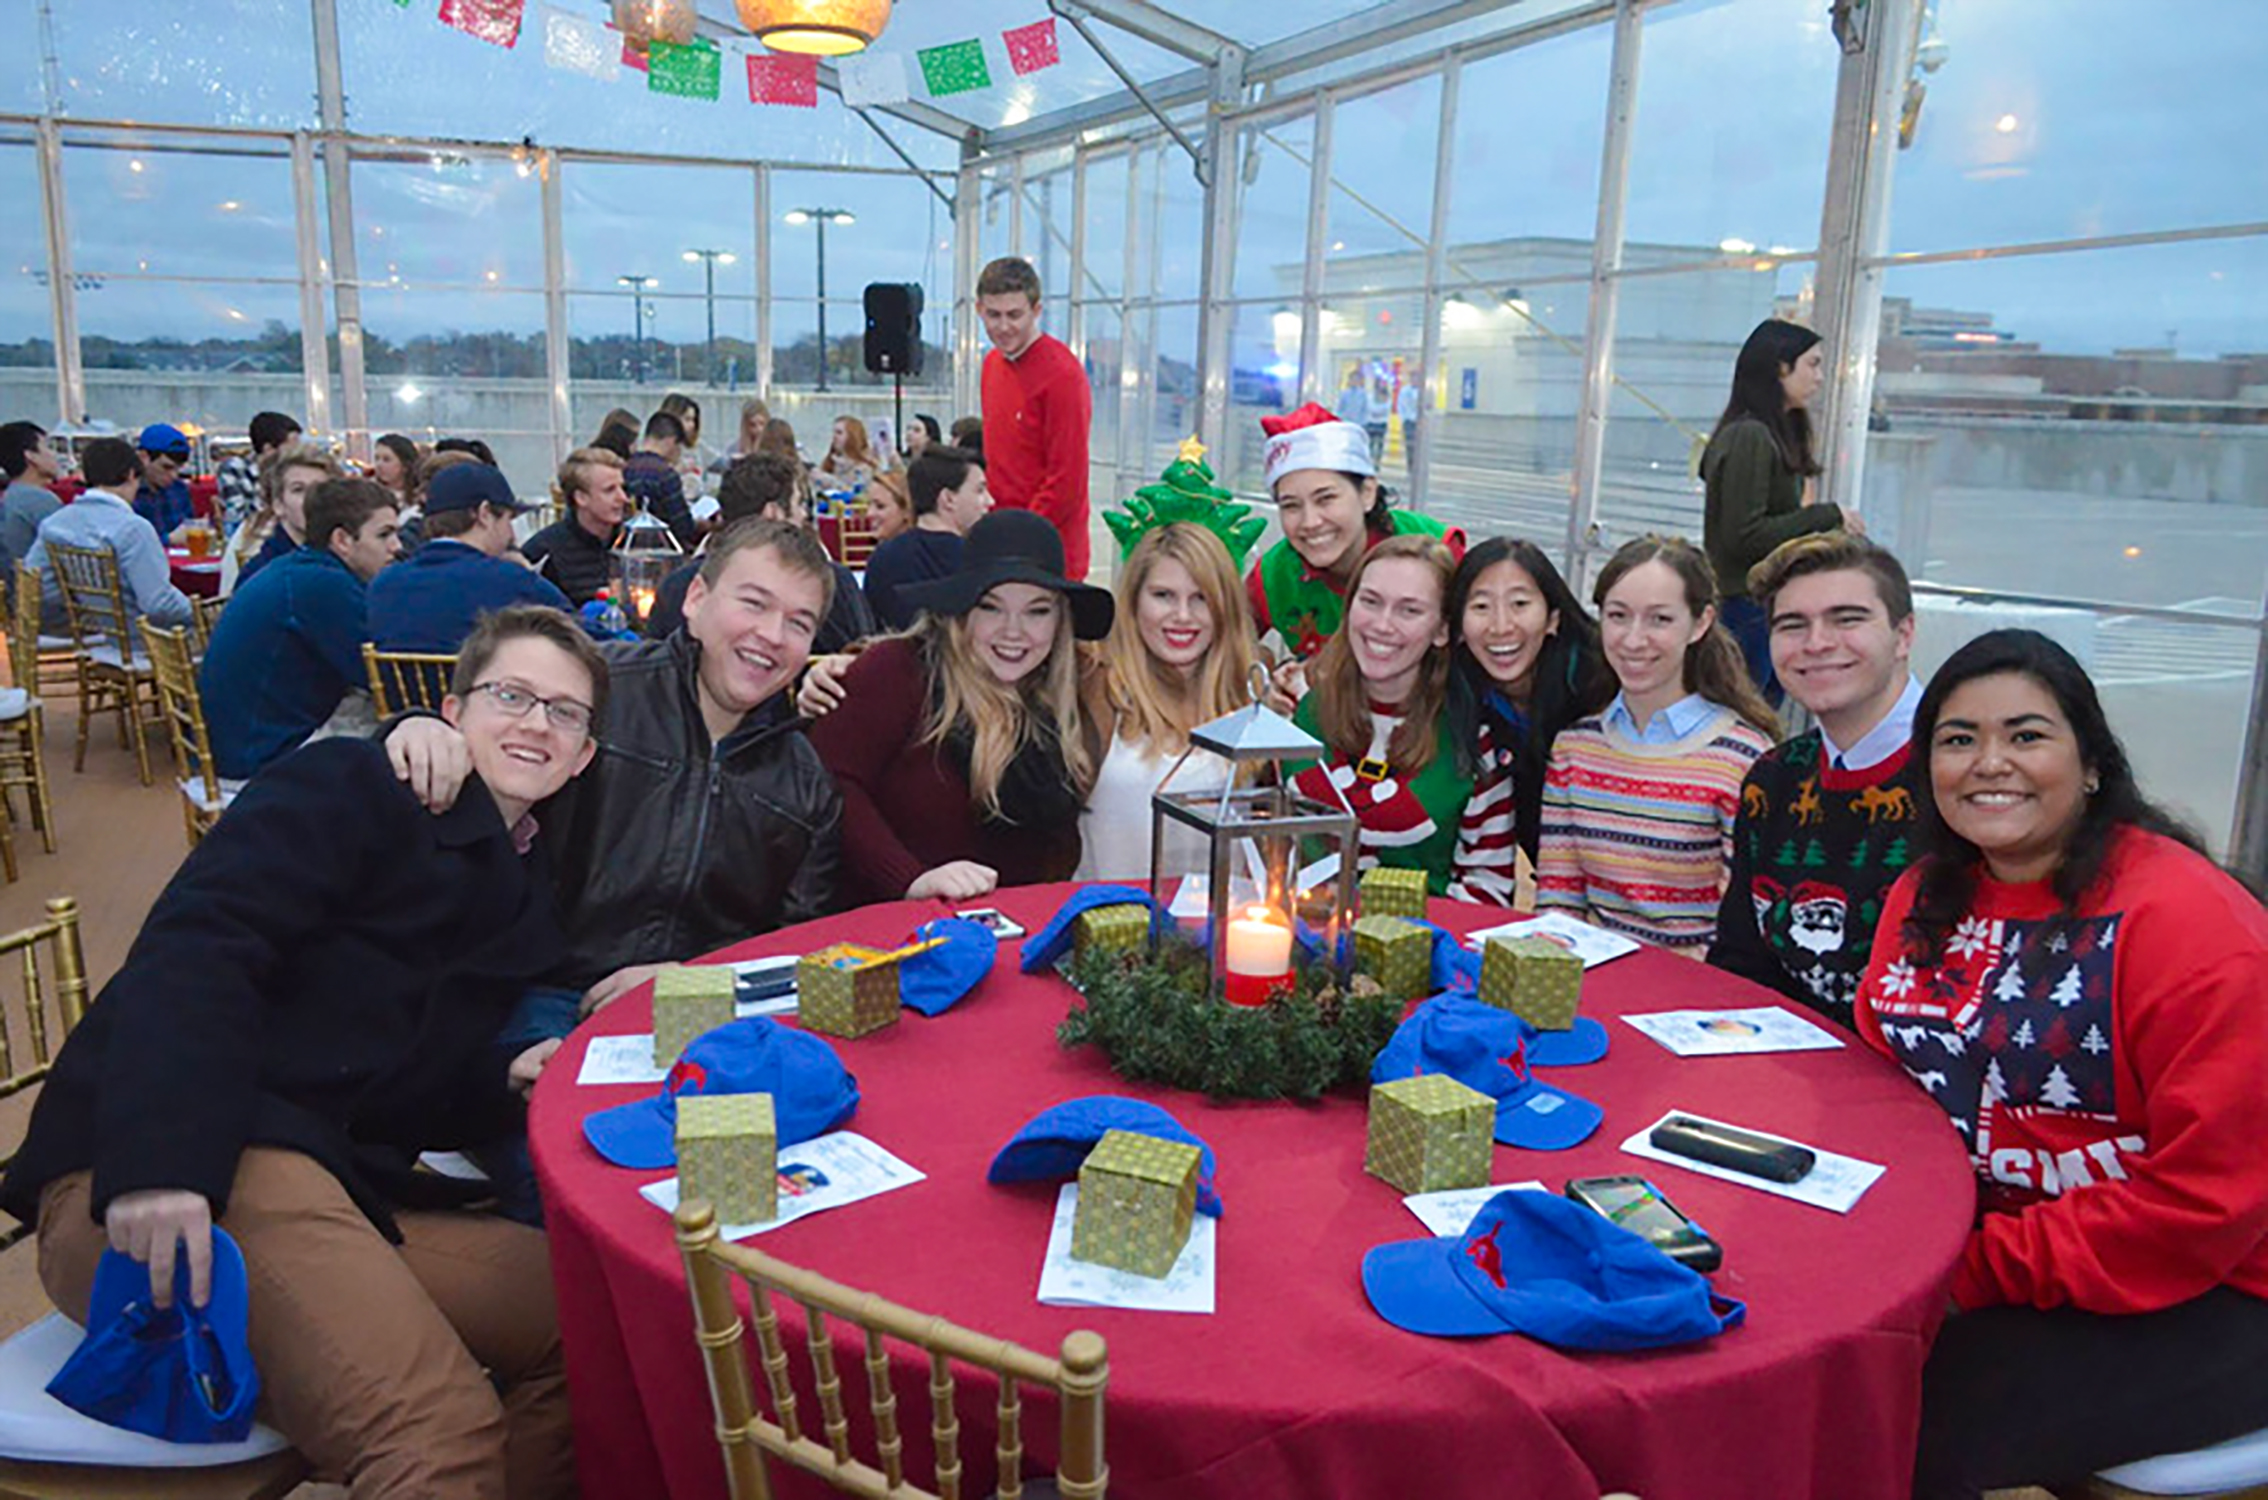 Students enjoying a roof top banquet